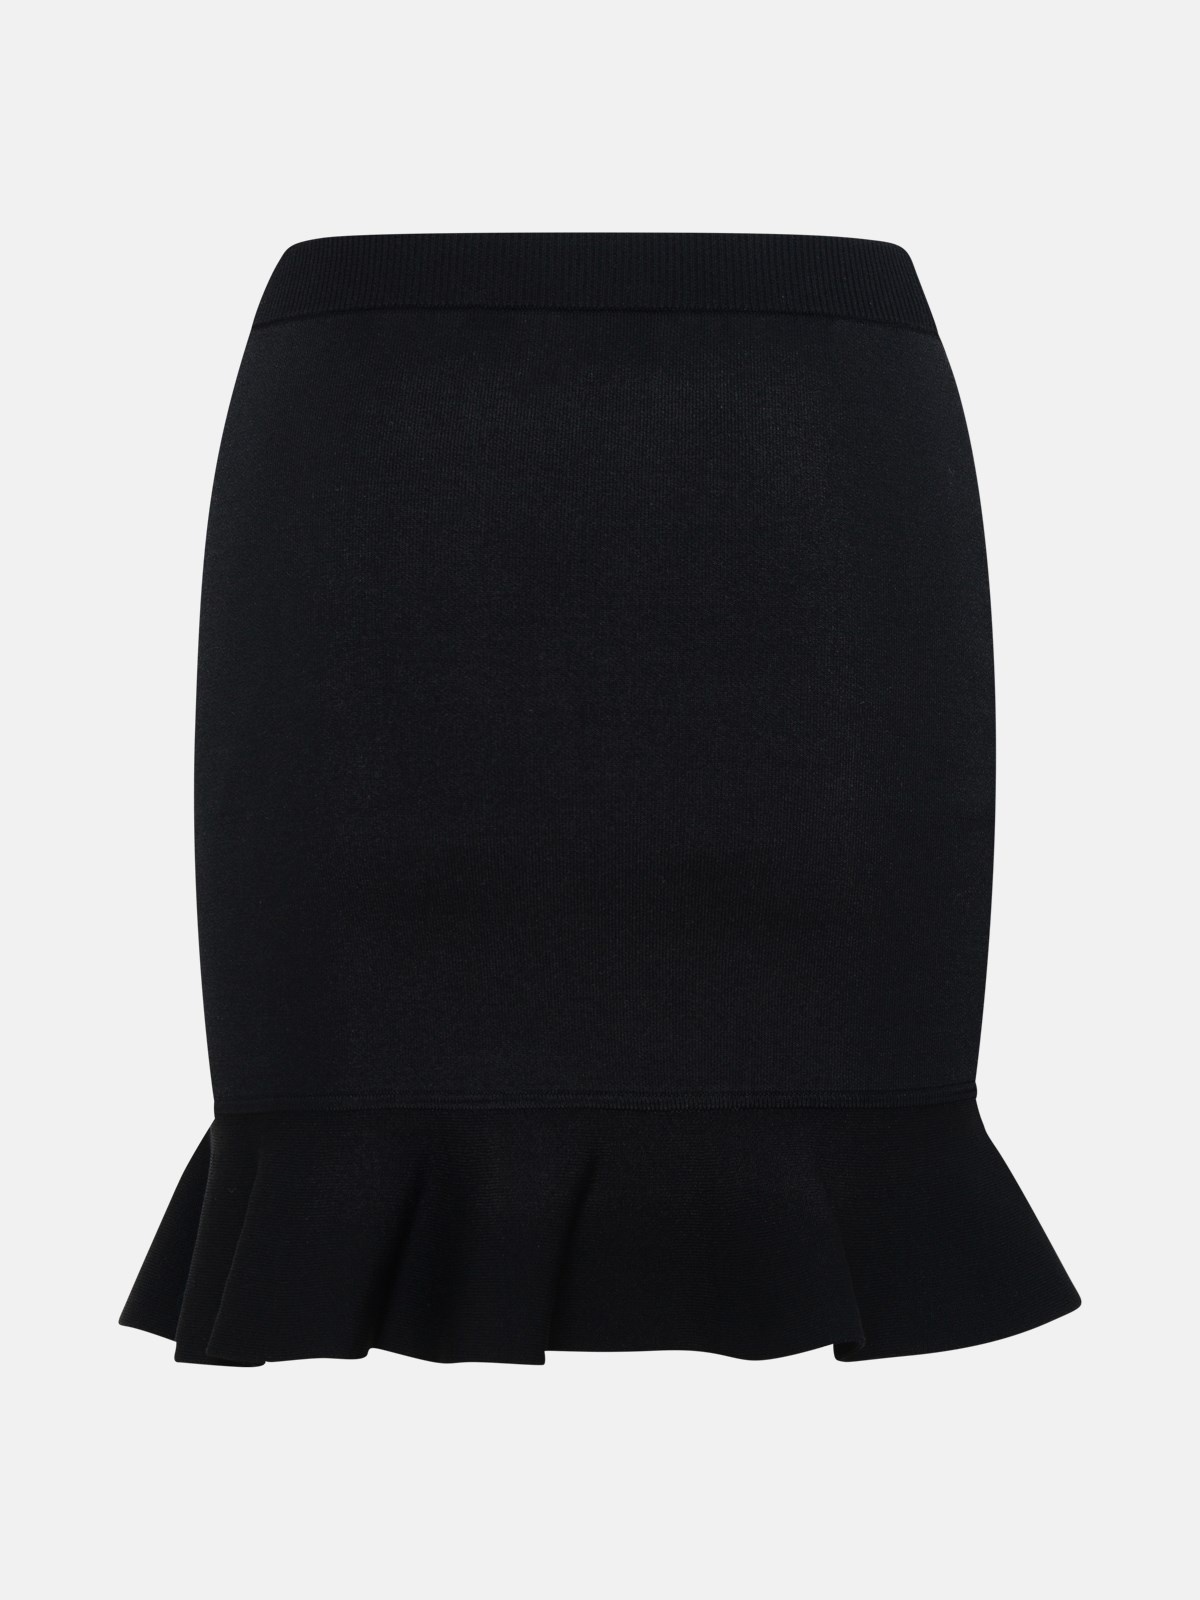 Black viscose blend skirt - 3